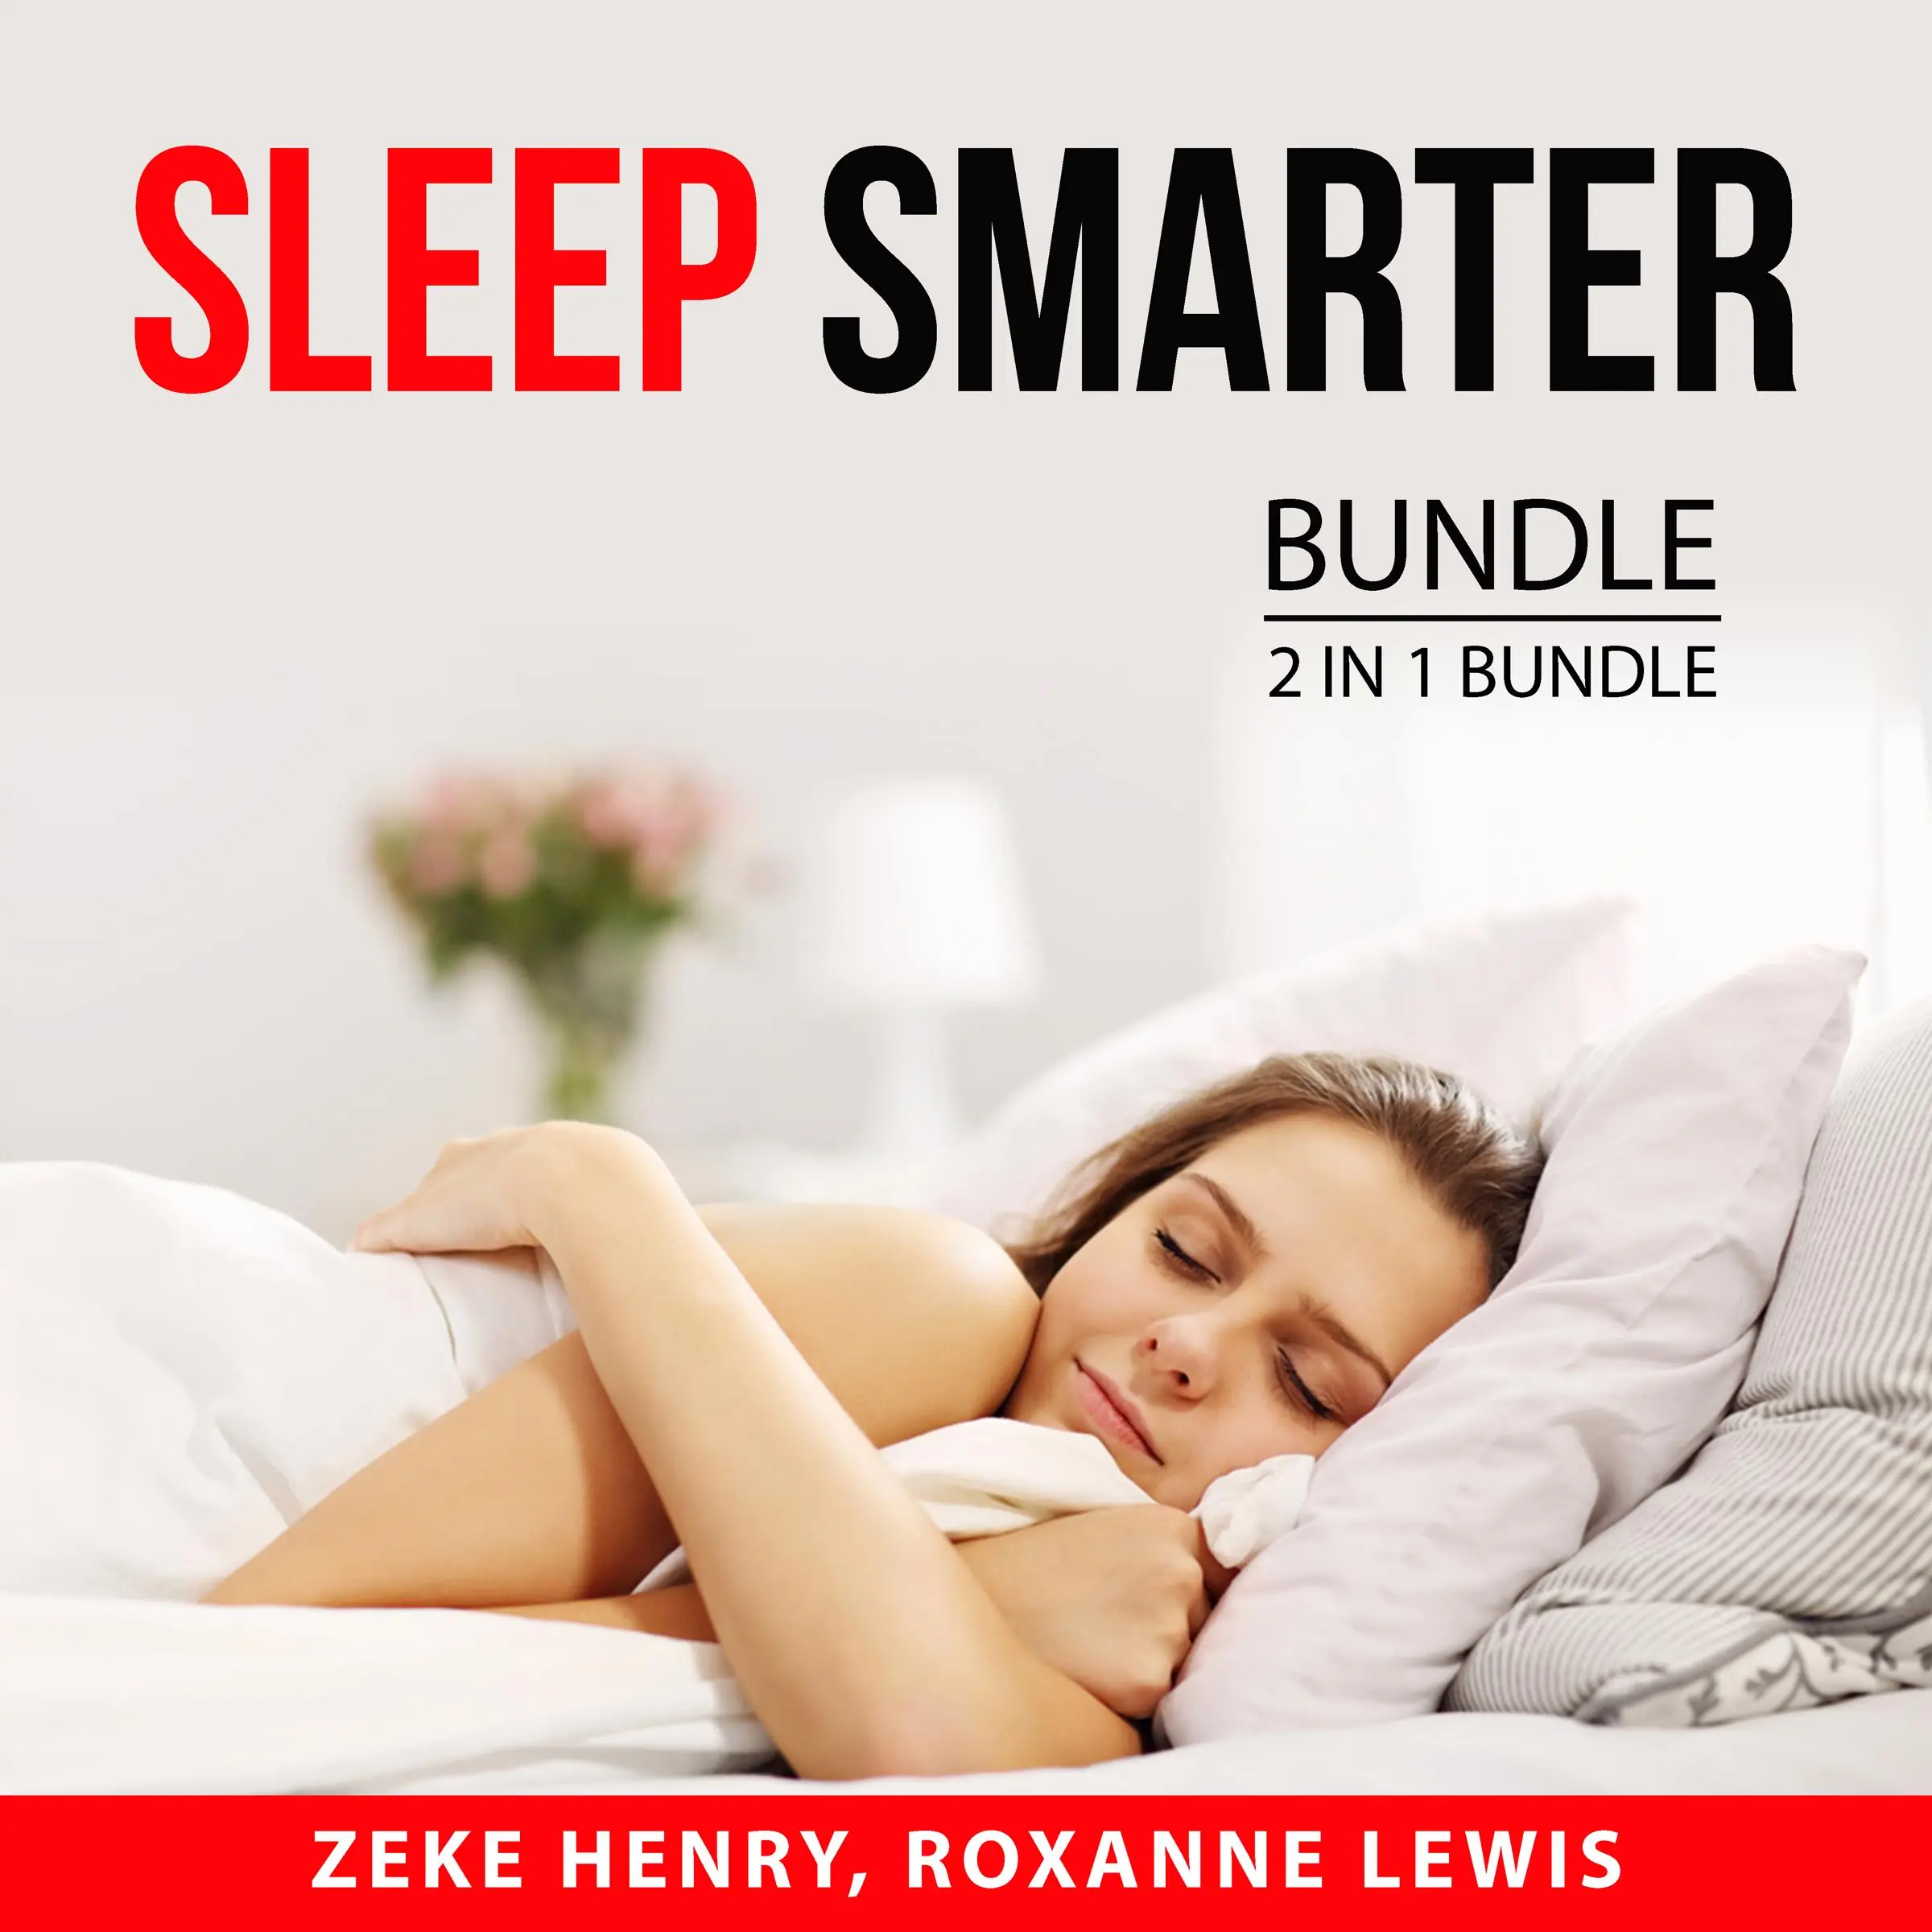 Sleep Smarter Bundle, 2 in 1 Bundle: Magic of Sleep and Precious Little Sleep Audiobook by and Roxanne Lewis